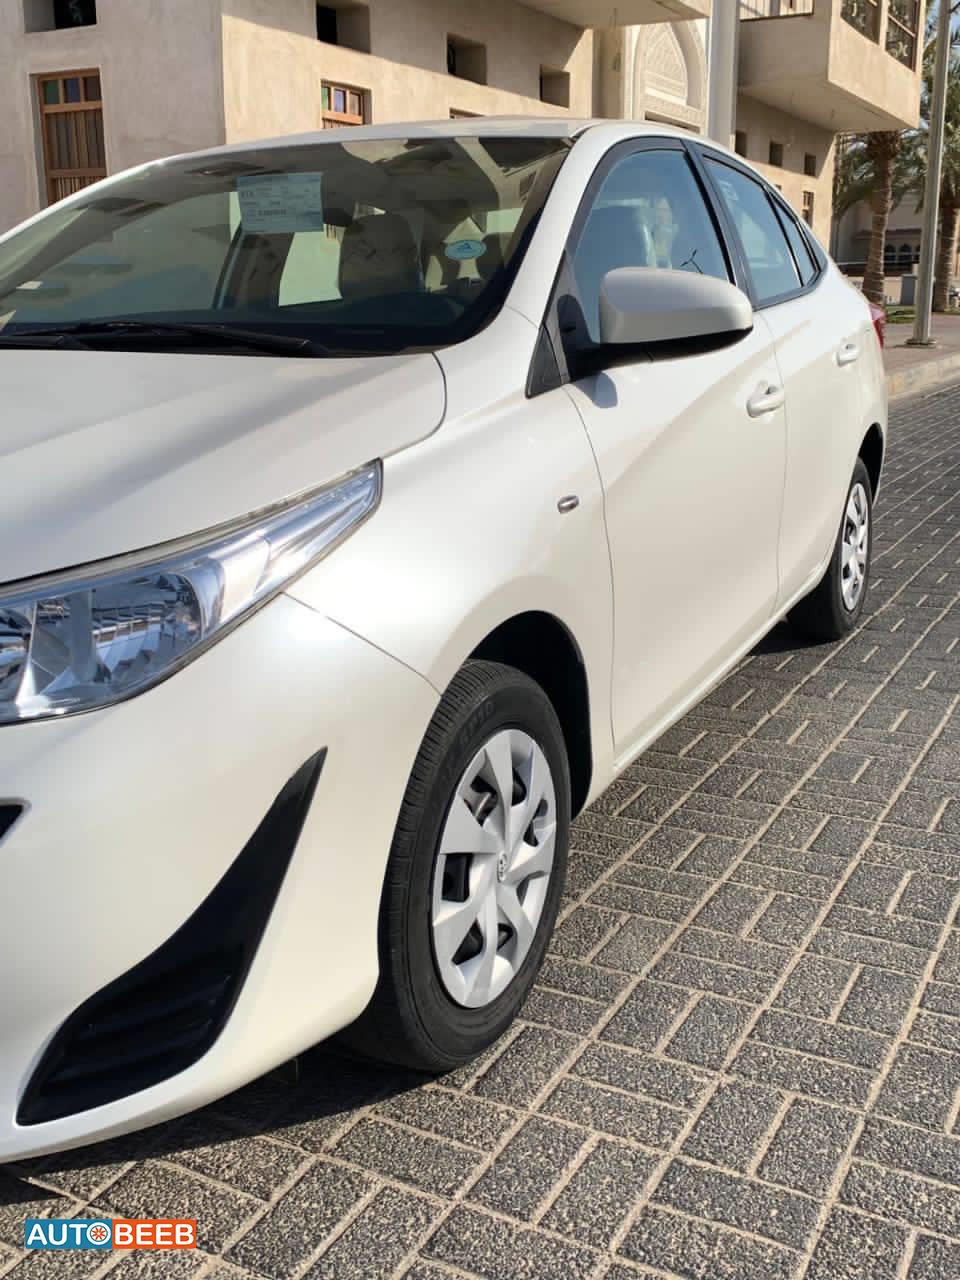 Toyota Yaris 2019